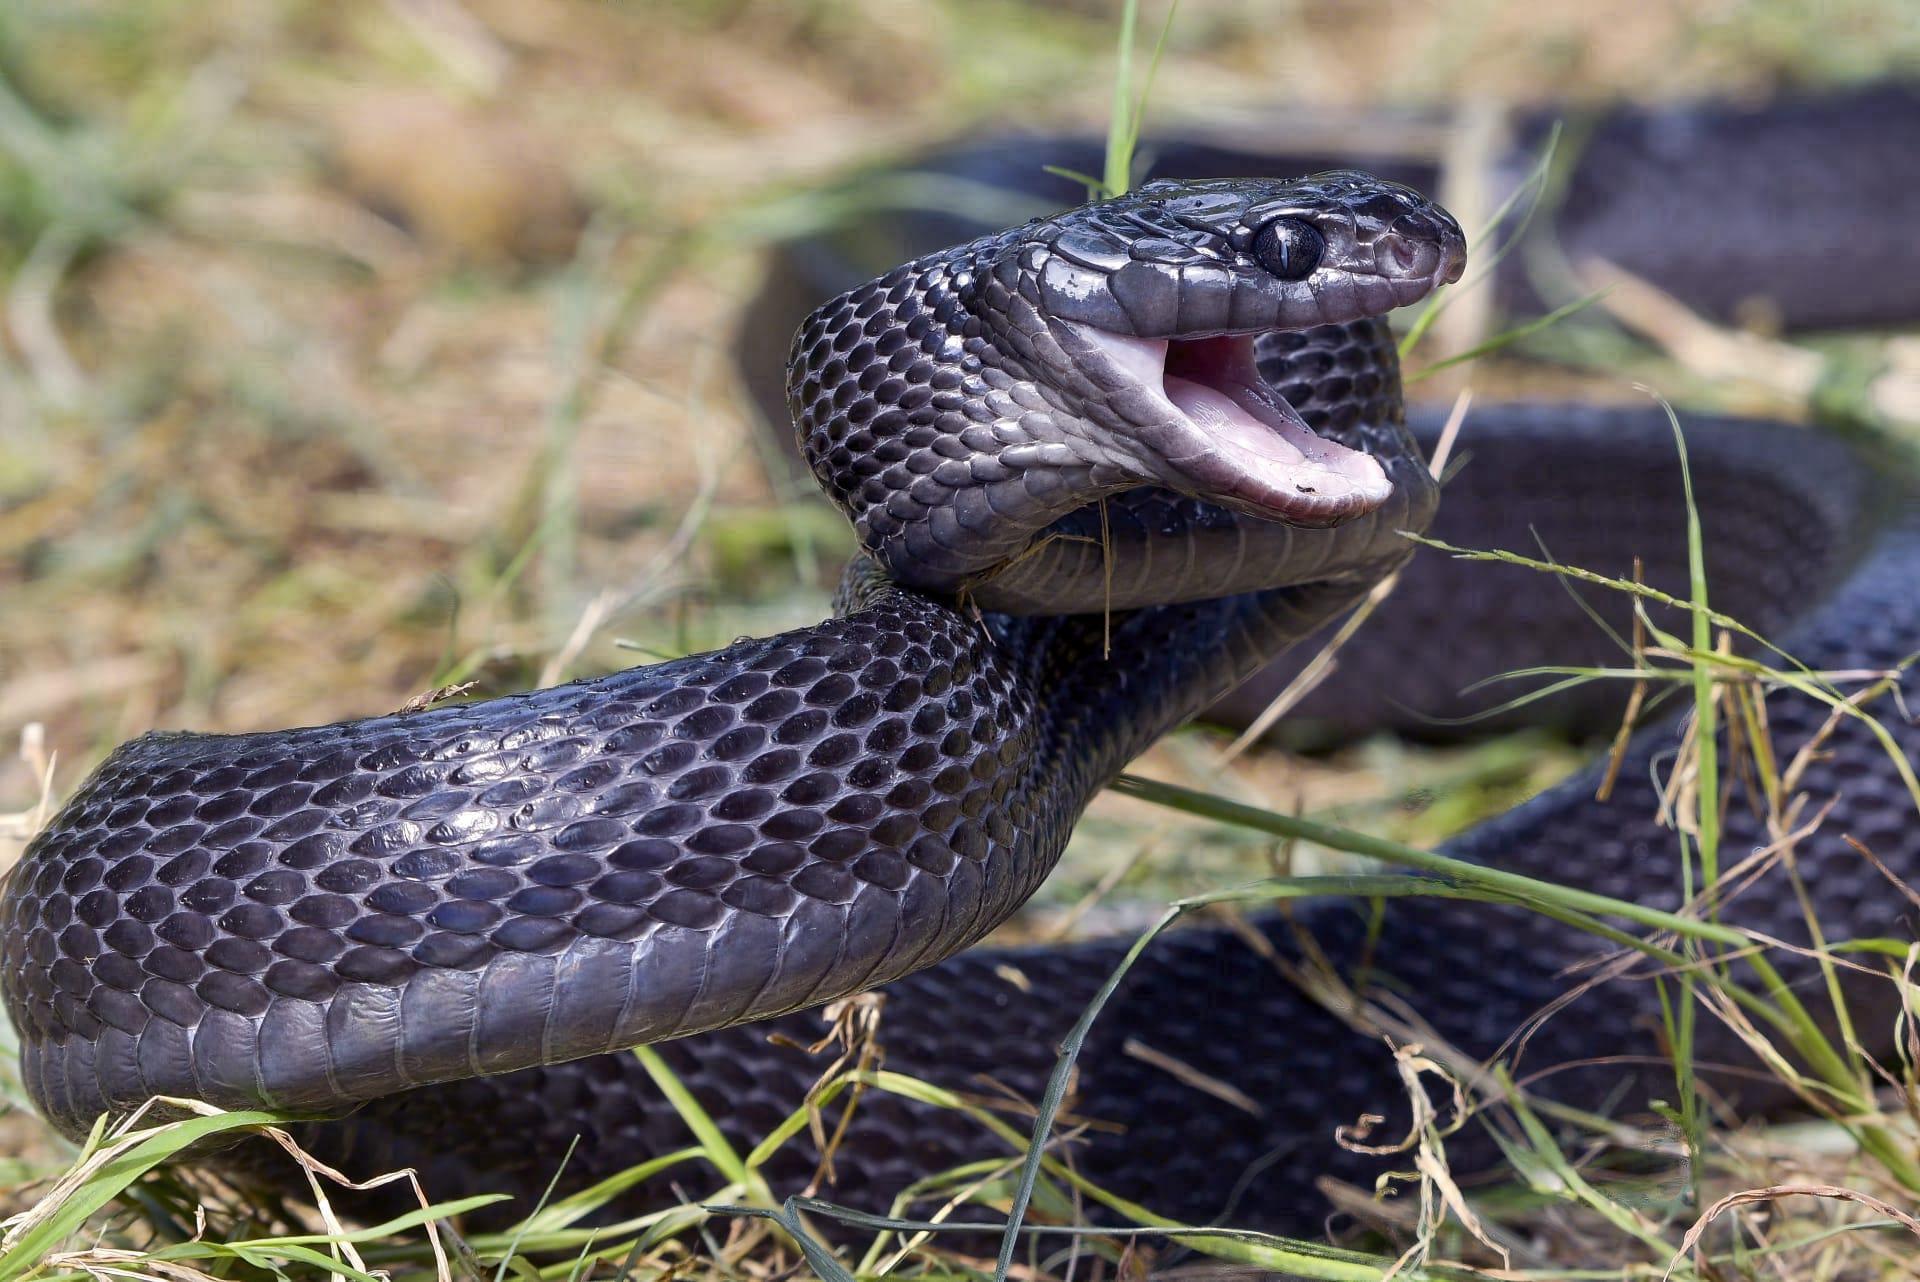 Black snake pictures